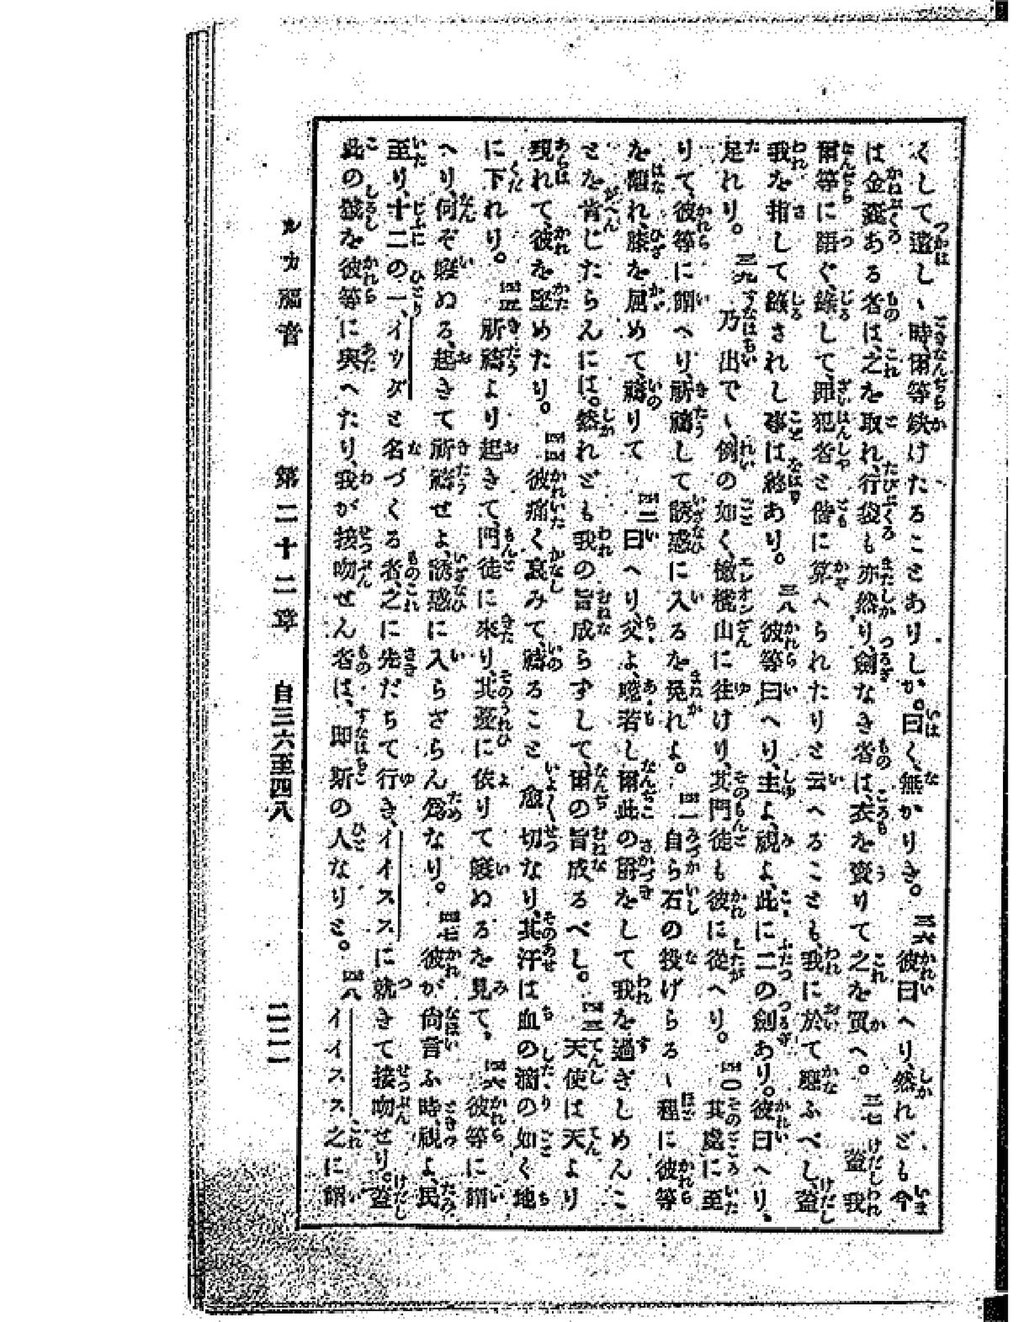 Page Wagasyu Iisusu Harisutosu Sin Yaku01 Pdf 227 Wikisource